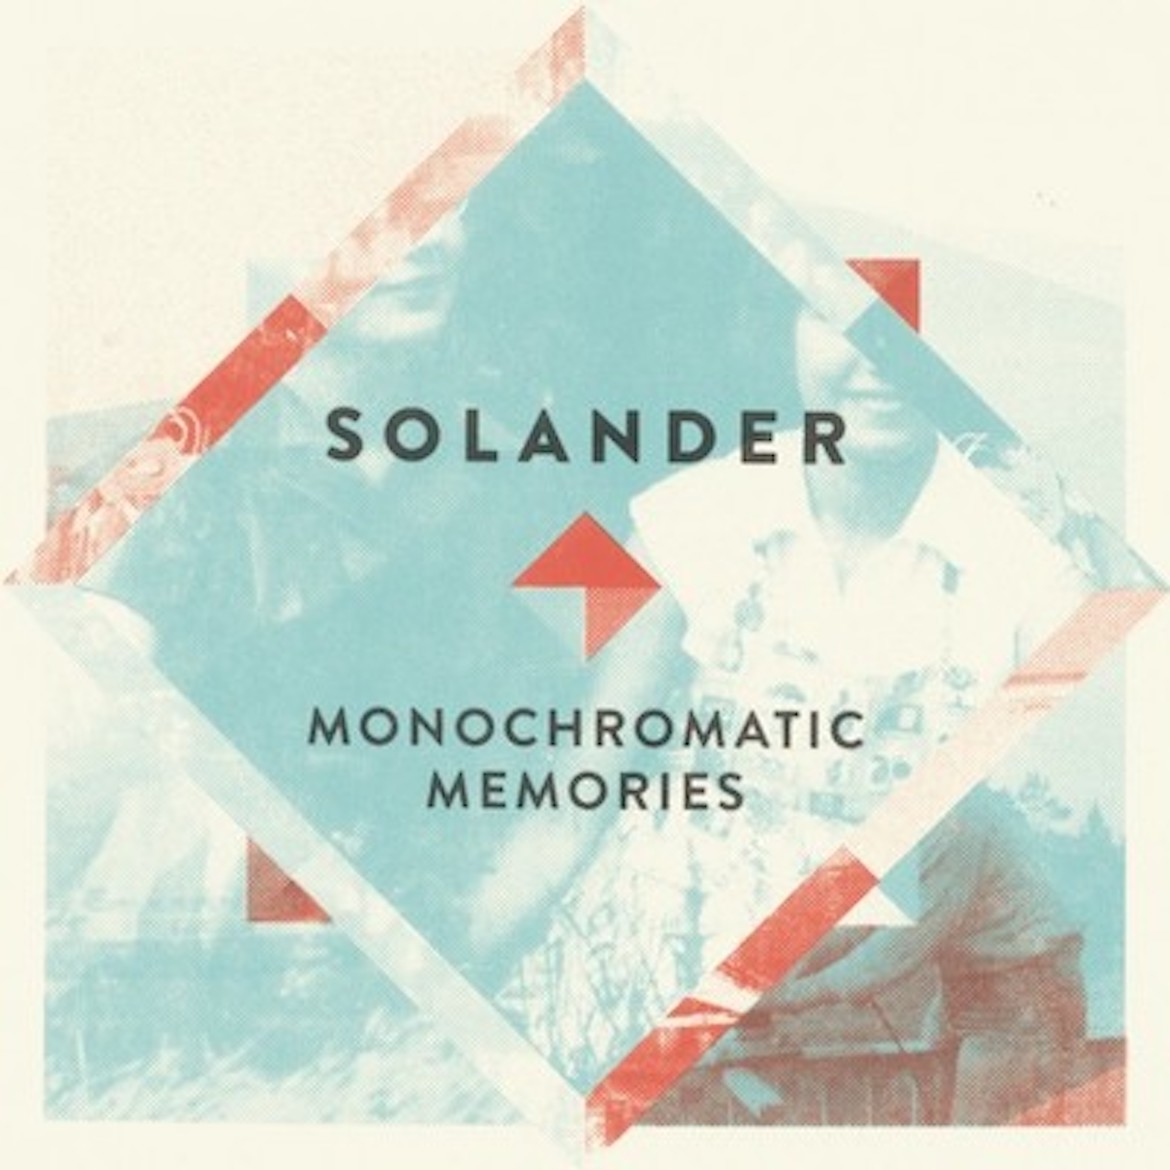 Monochromatic Memories album cover from Solander